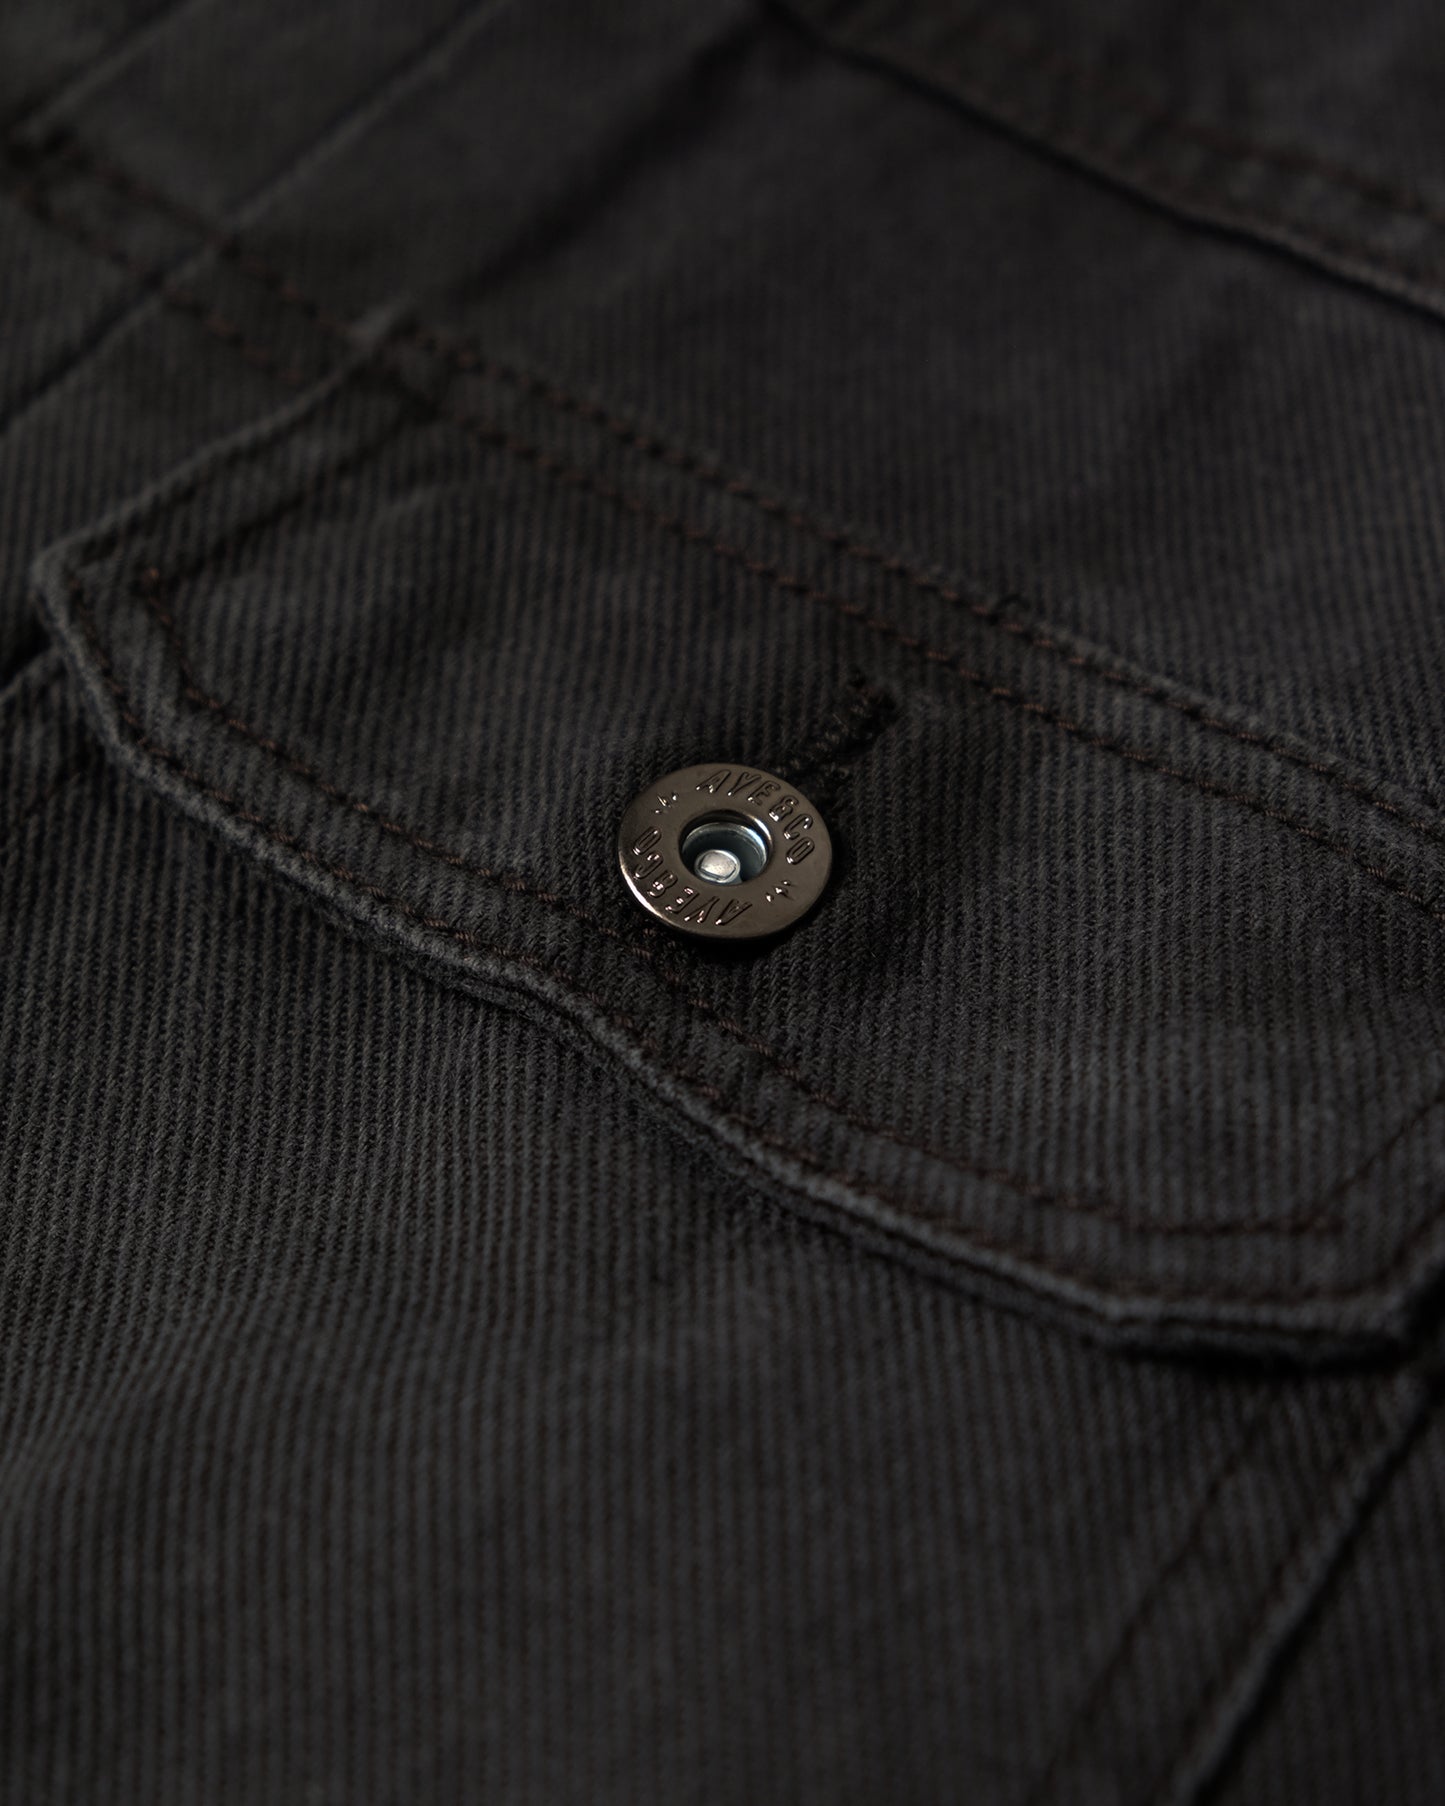 Salomon Type 2 Black Washed Jacket - Relaxed Fit